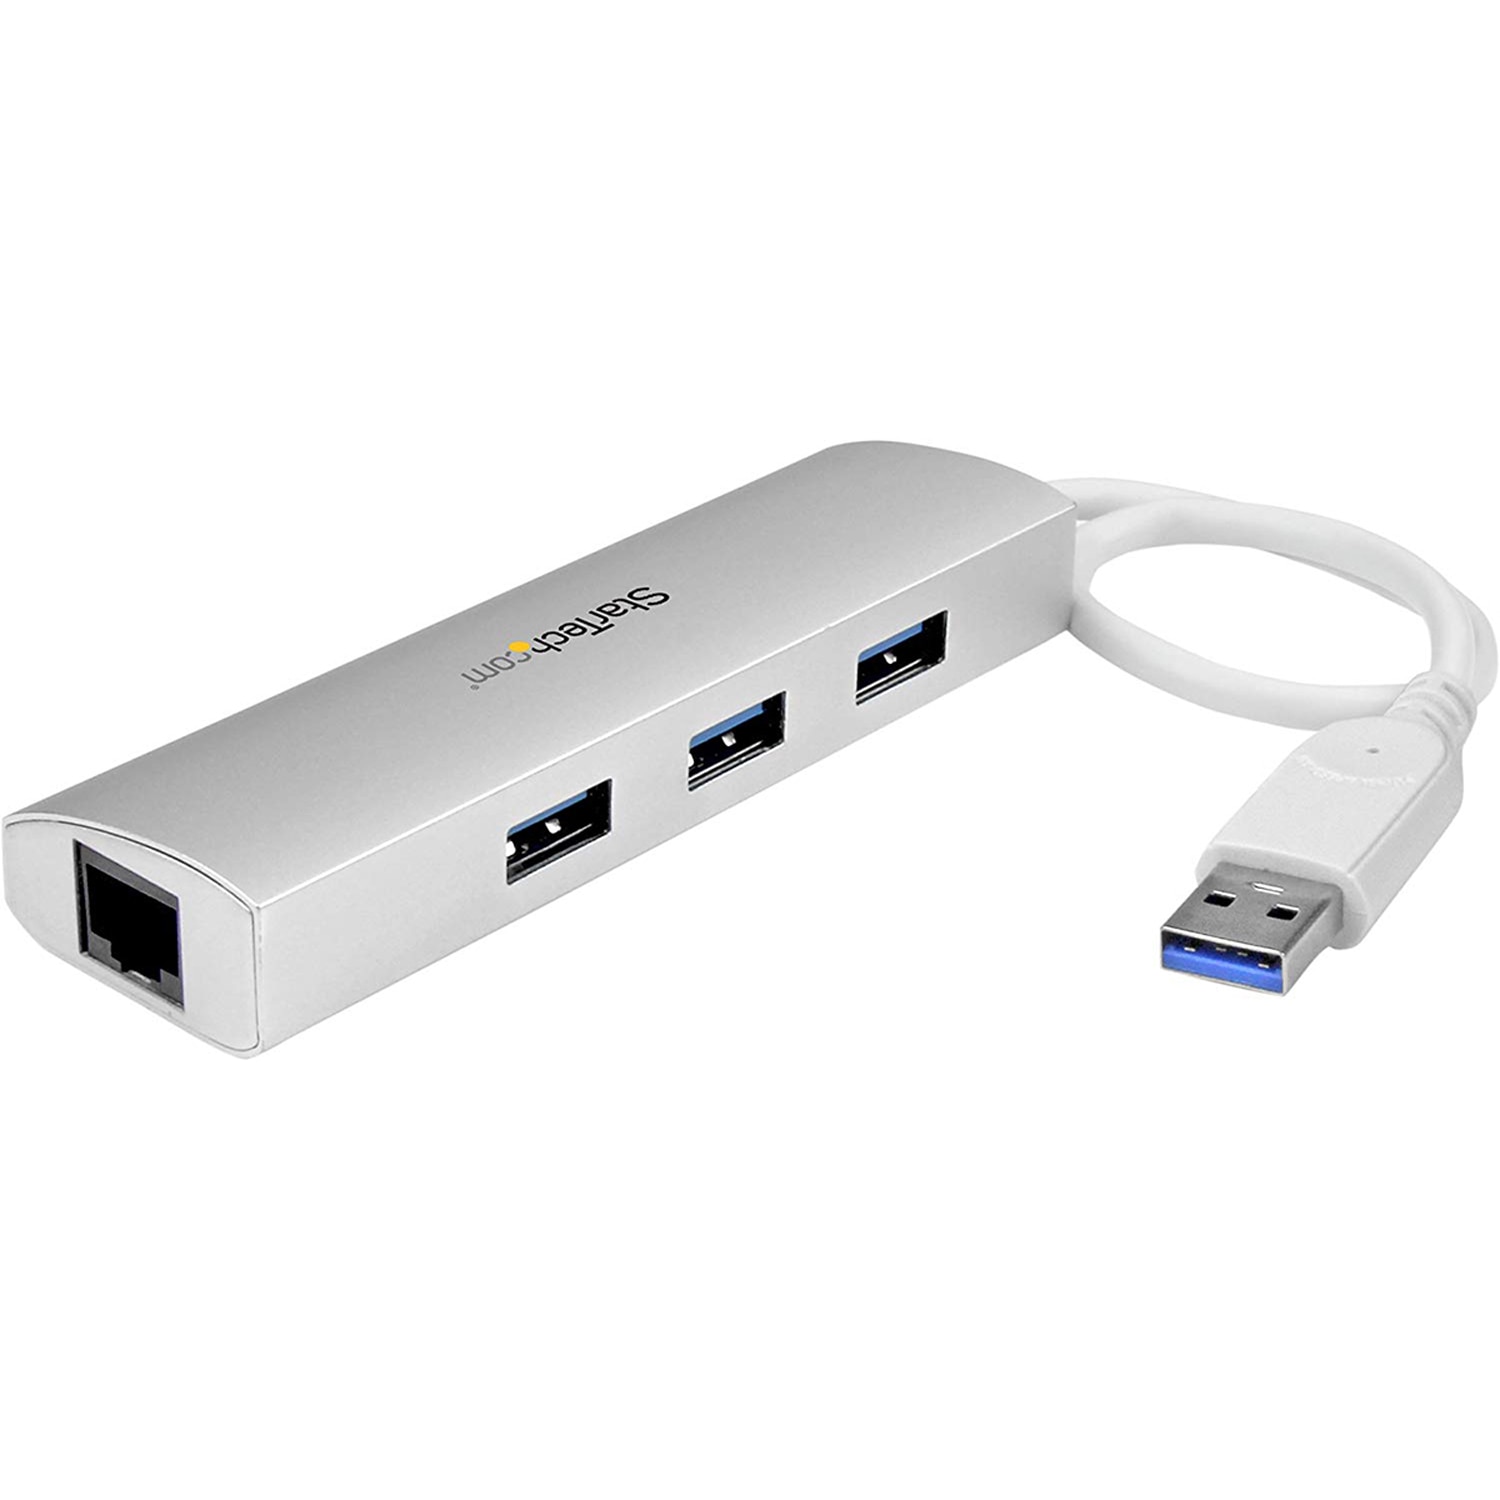 Startech 3Pt Prtbl USB 3.0 w Ethernet